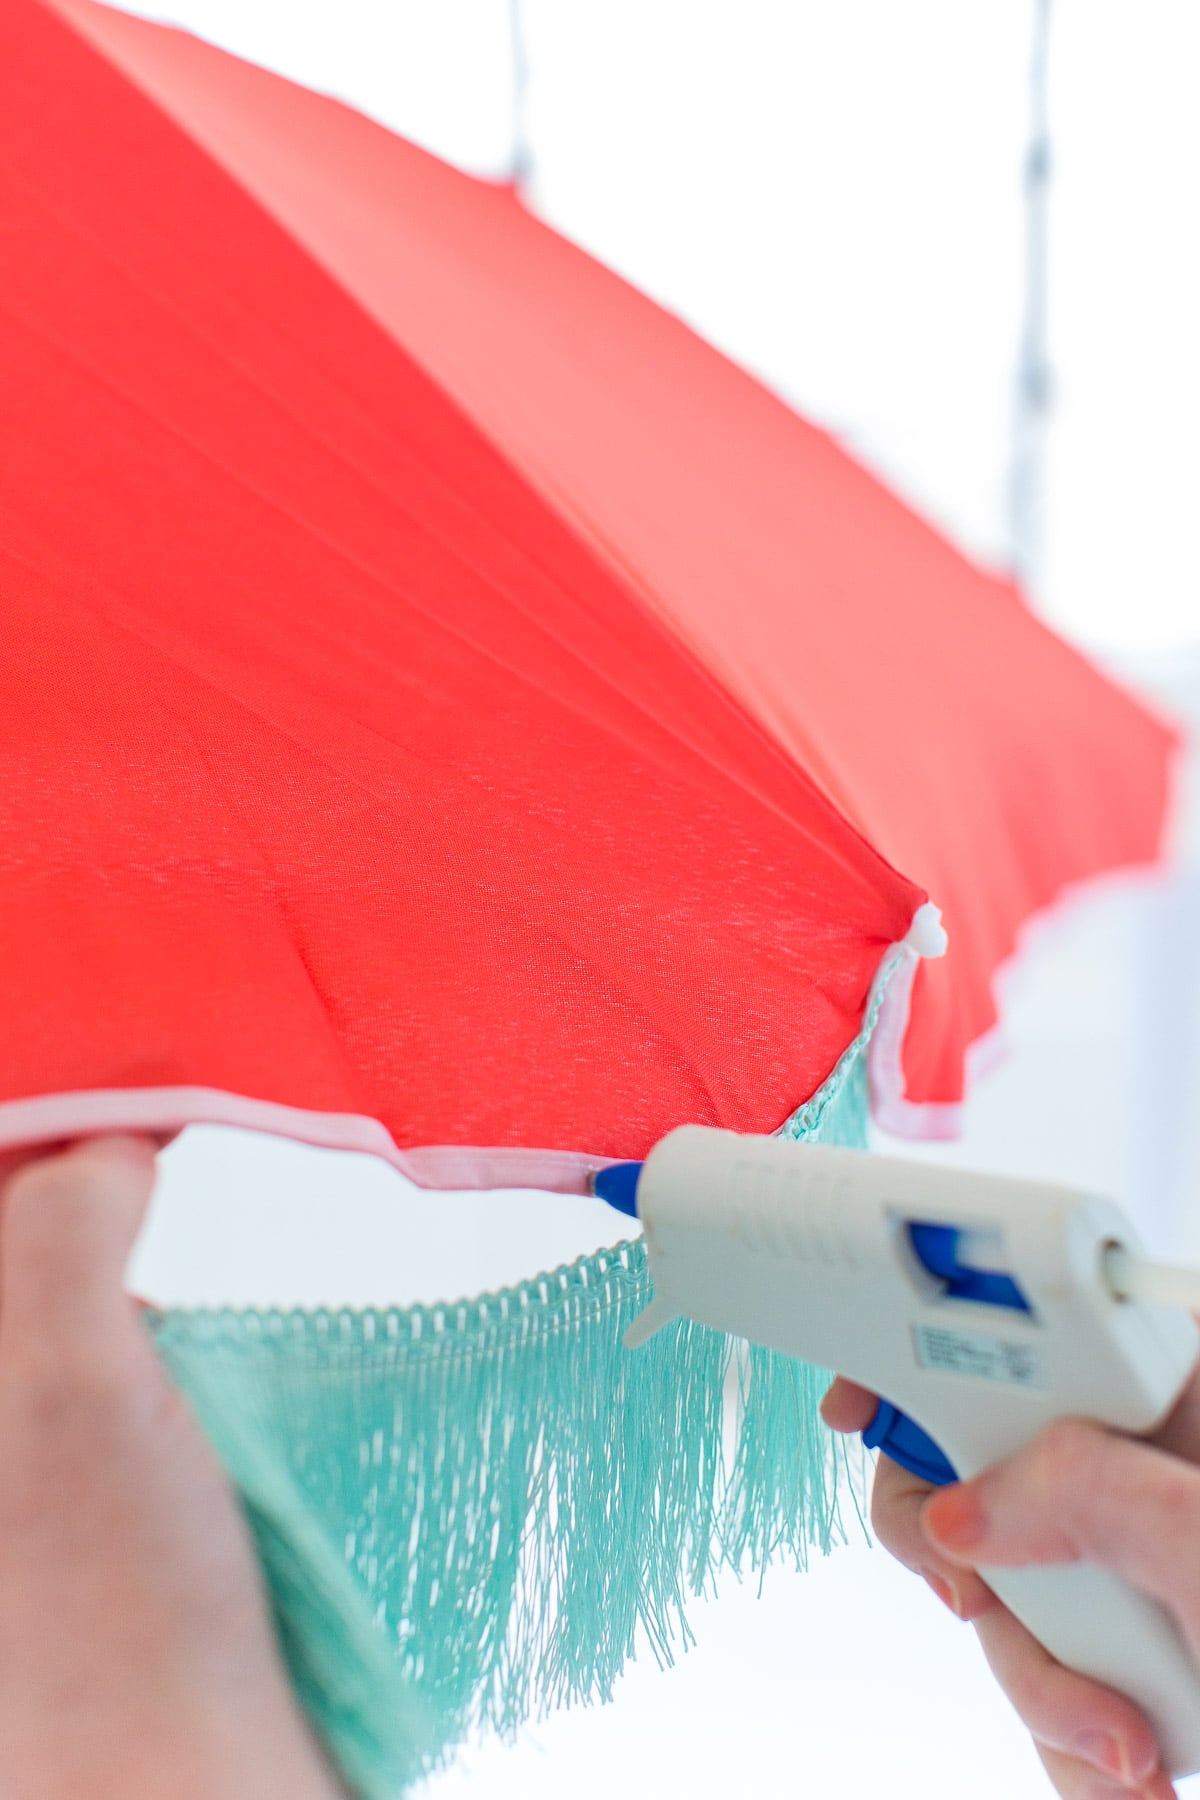 The cutest DIY retro beach umbrella for under $100 by Sugar and Cloth! - houston blogger - summer